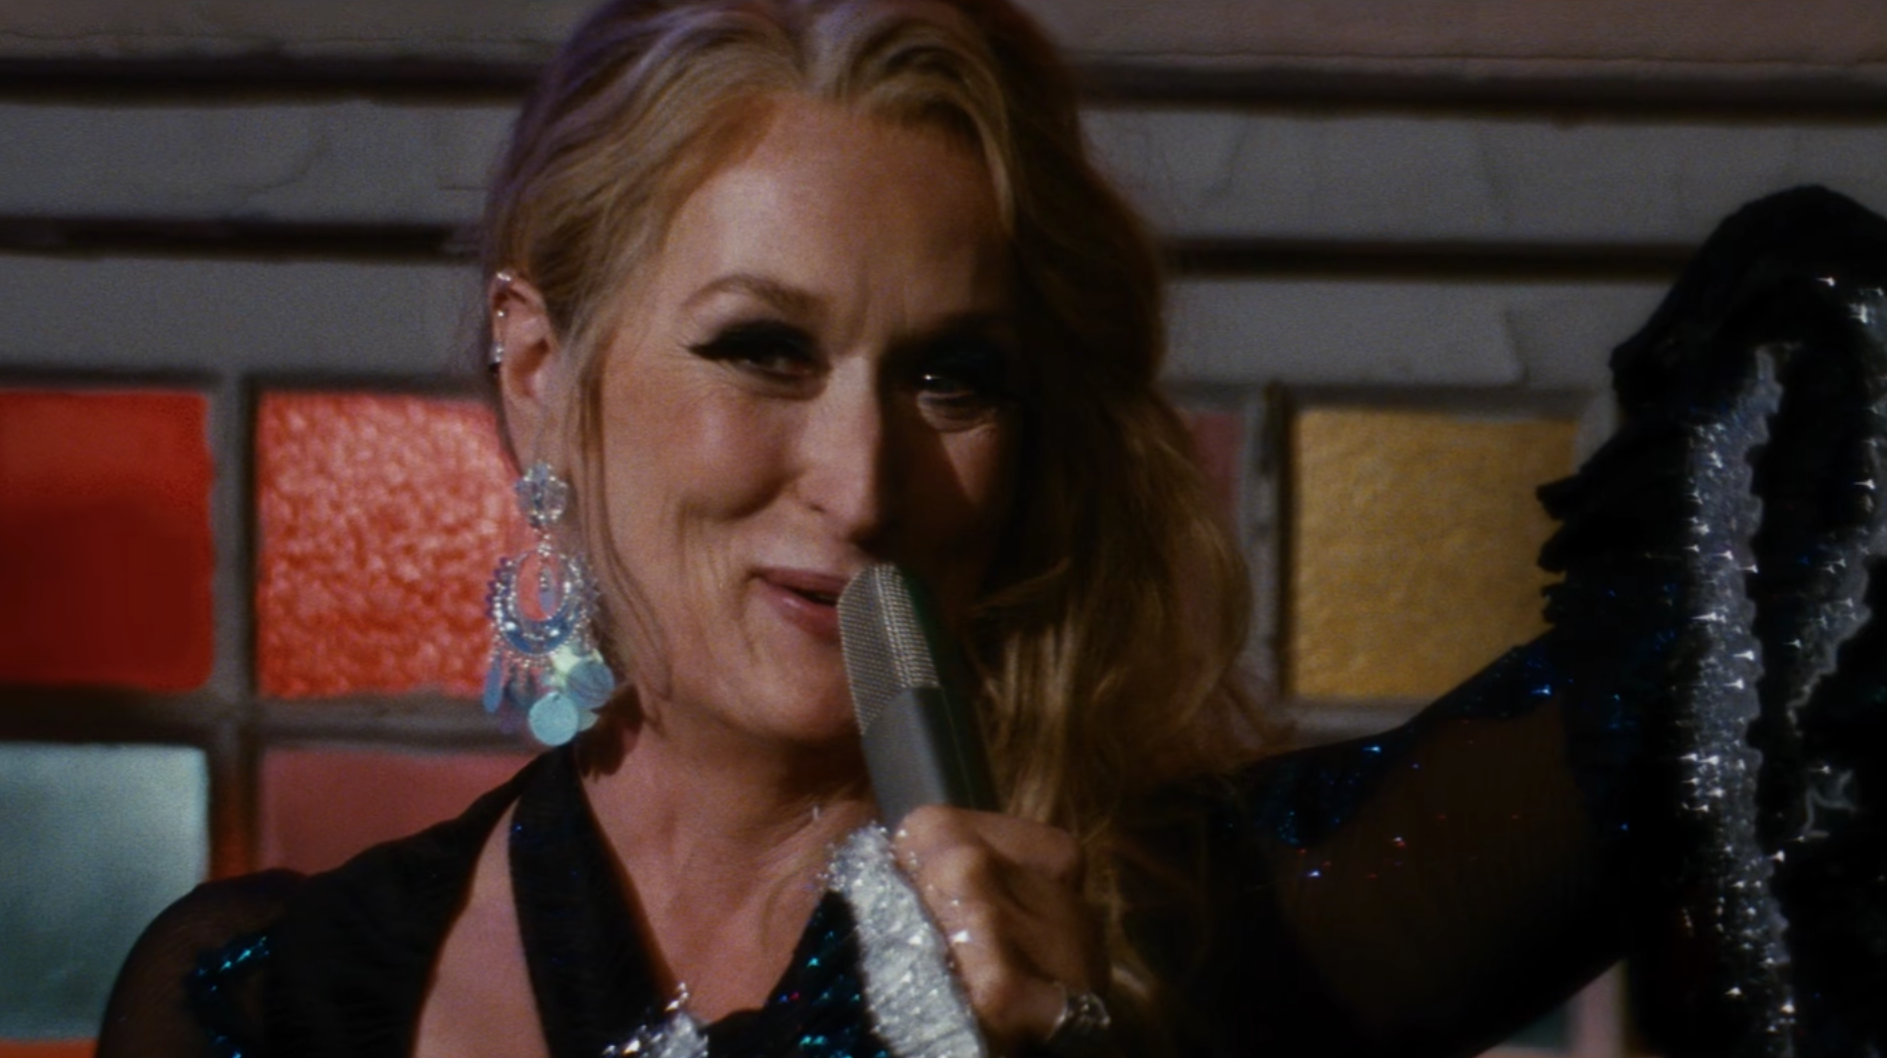 Will 'Mamma Mia 2' Kill Off Meryl Streep? Twitter Sure Thinks So